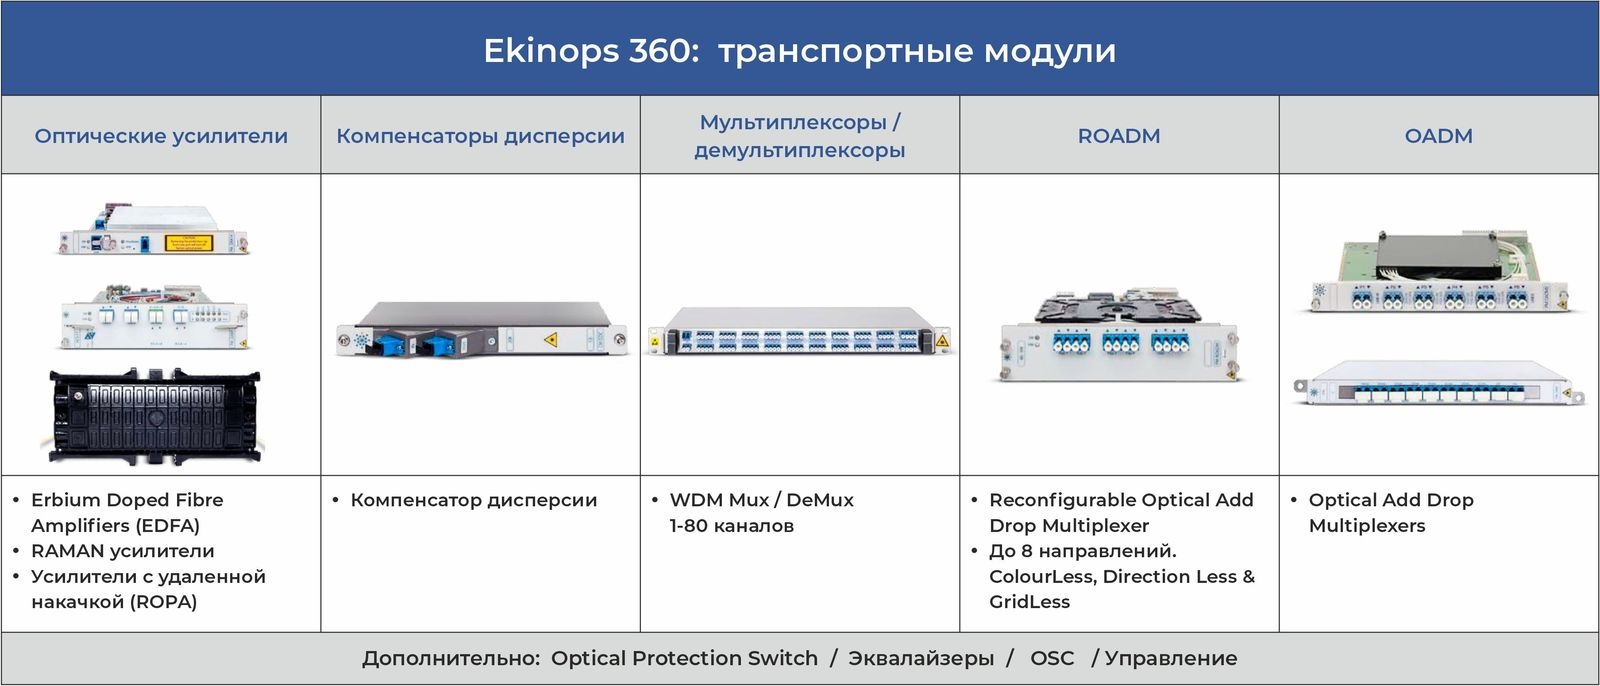 Ekinops 360_транспортные модули